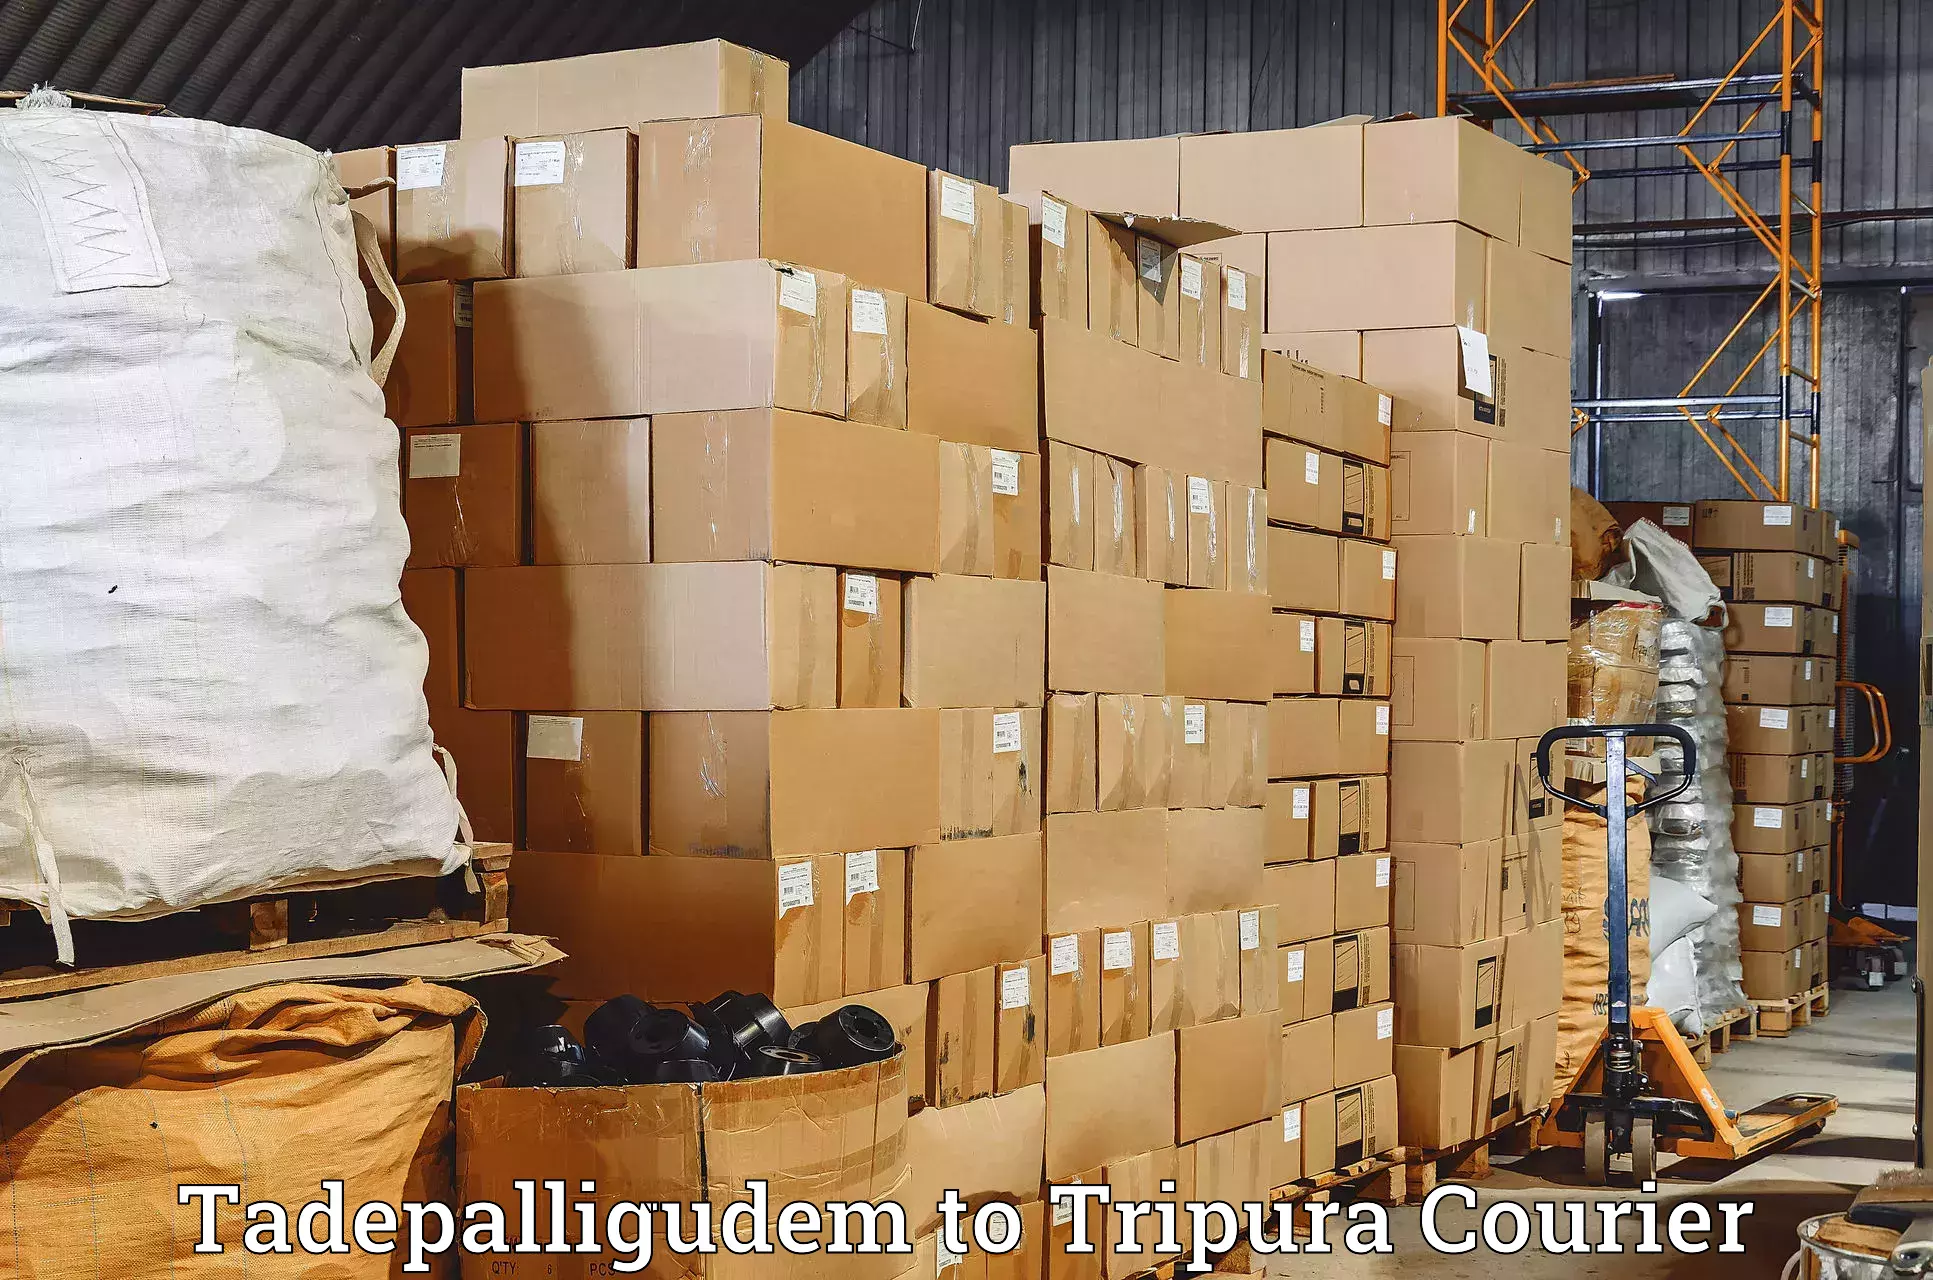 Courier service comparison Tadepalligudem to Manu Bazar